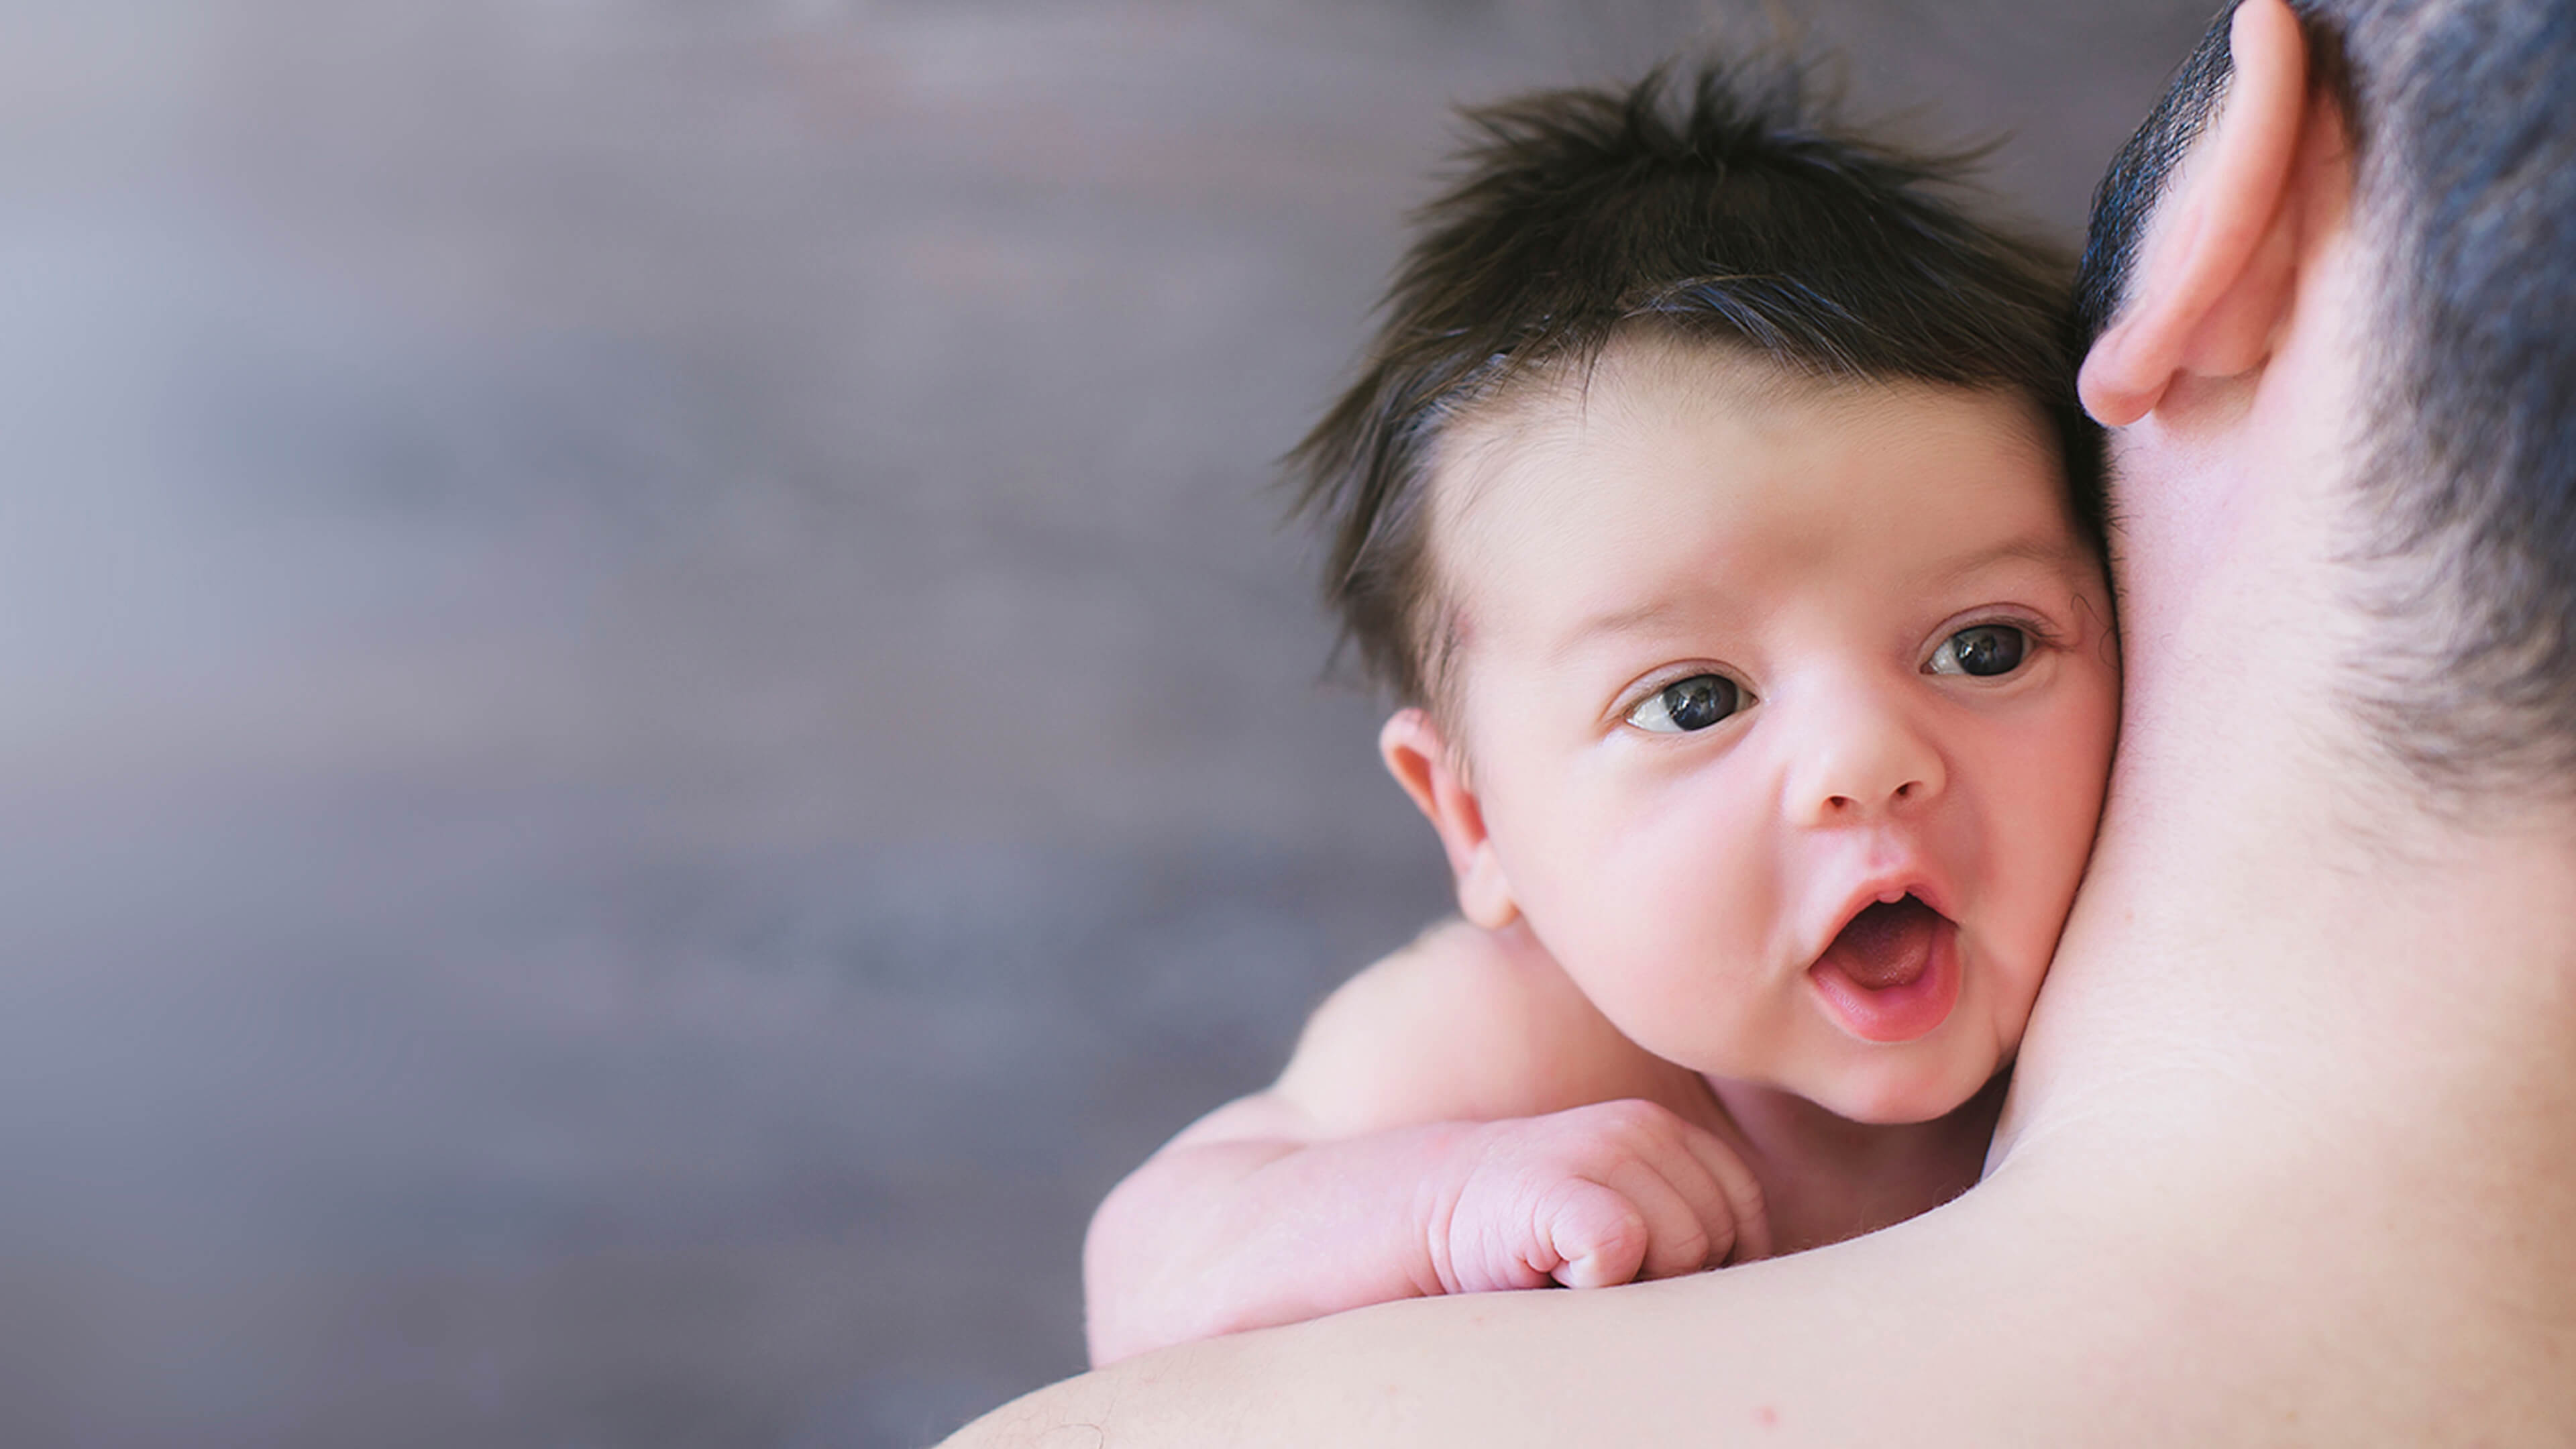 Acid reflux in babies signs